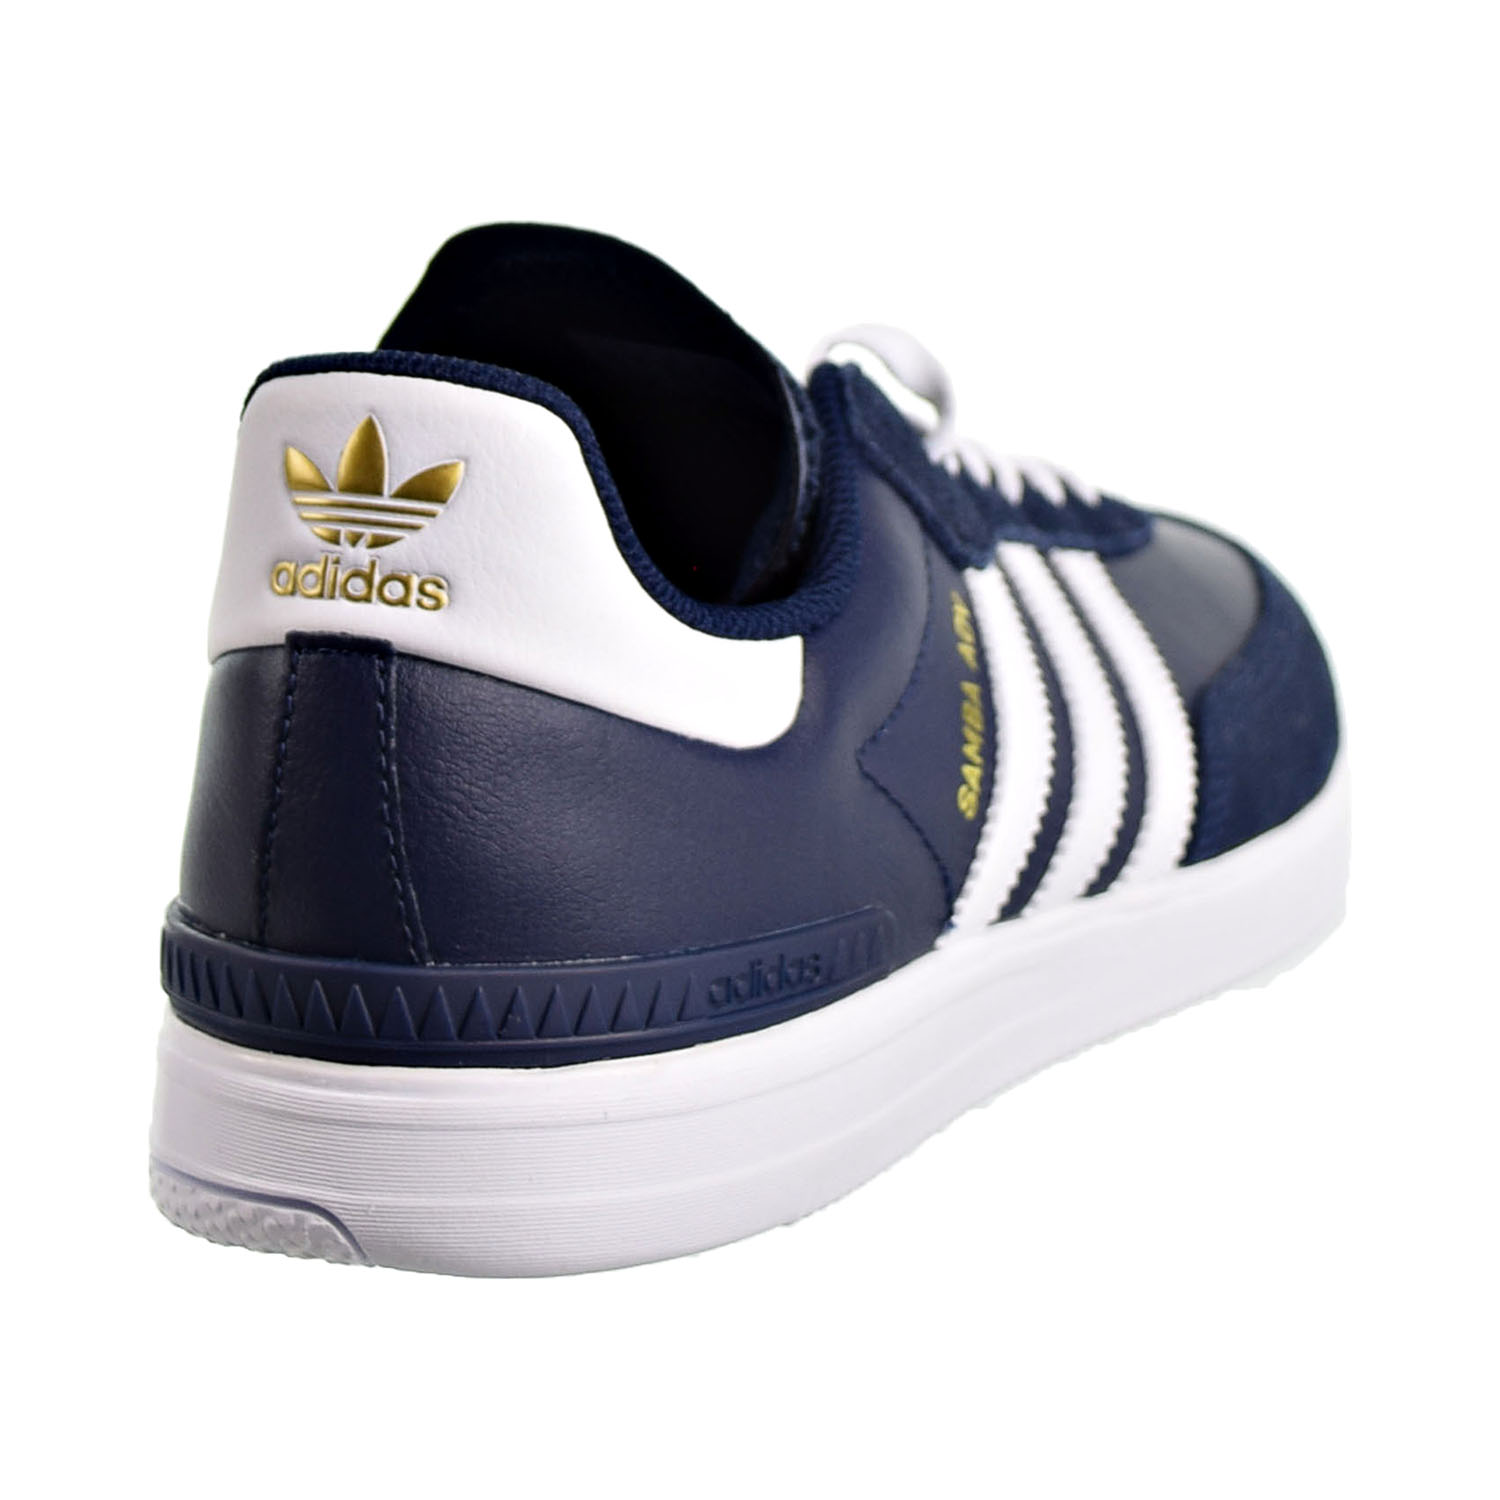 Adidas Samba ADV Mens Shoes Collegiate Navy-Footwear White B22741 | eBay